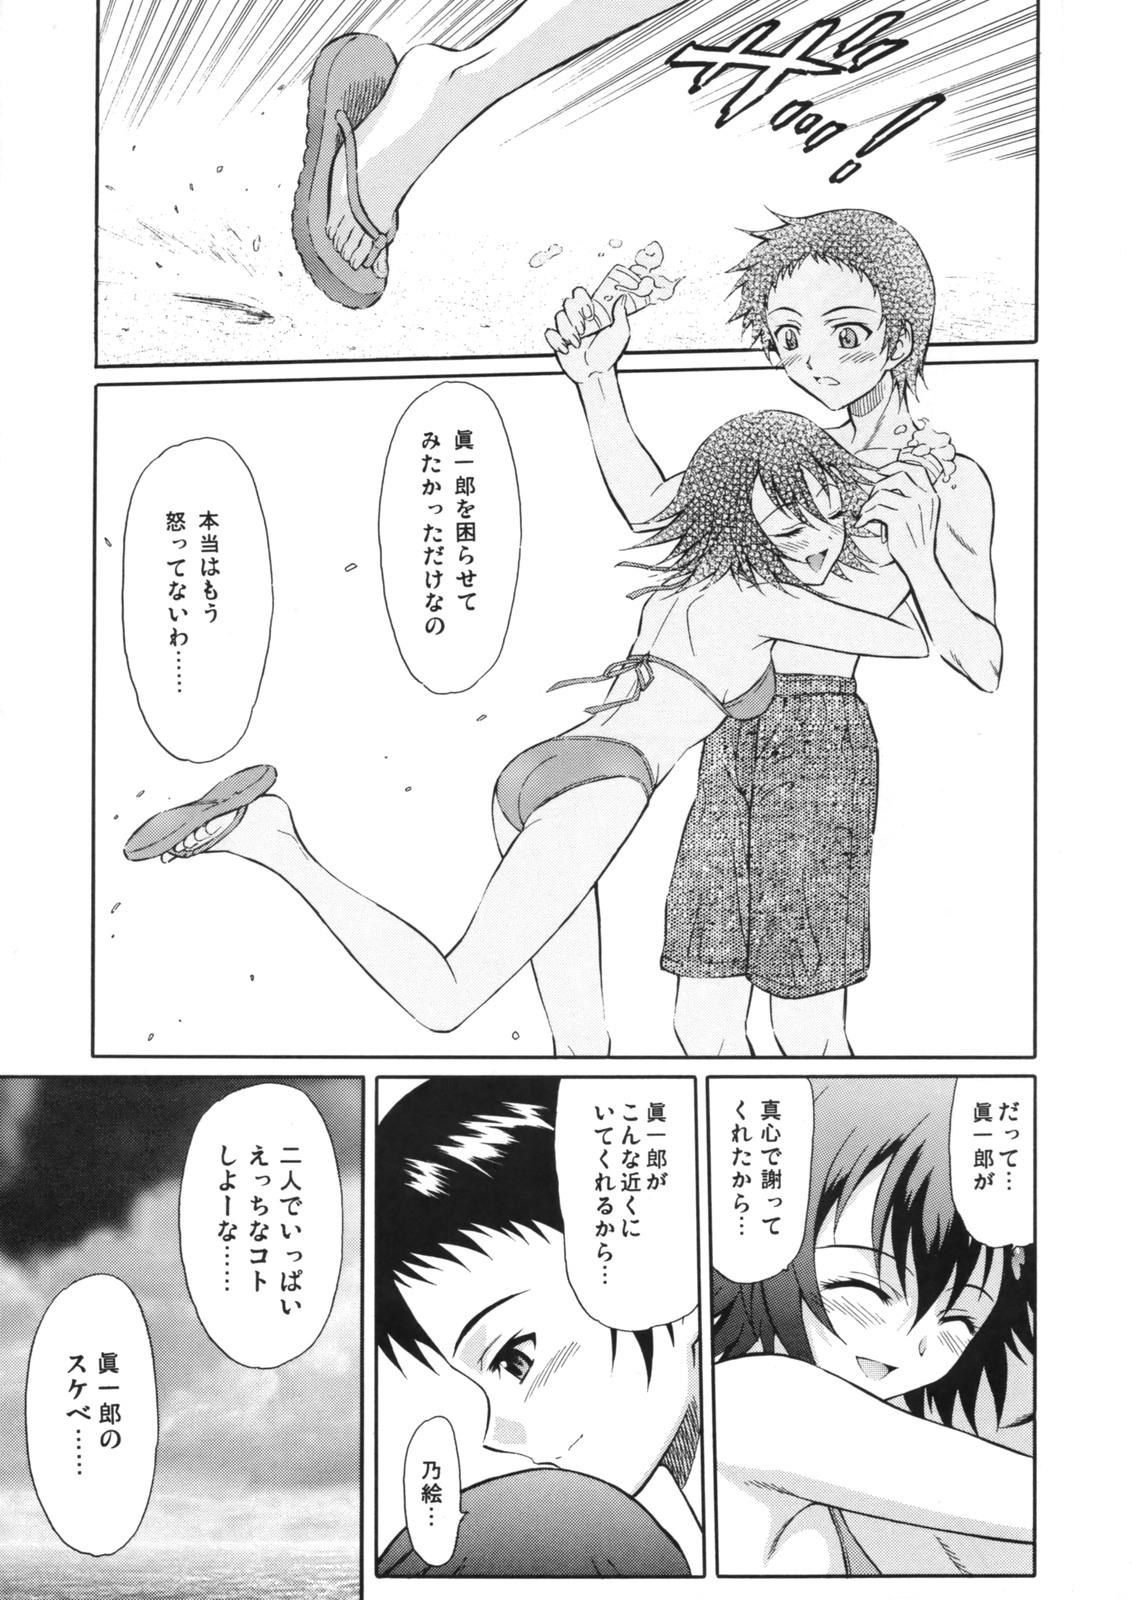 Fit Tenshi no Namida 2 - True tears Chibola - Page 4